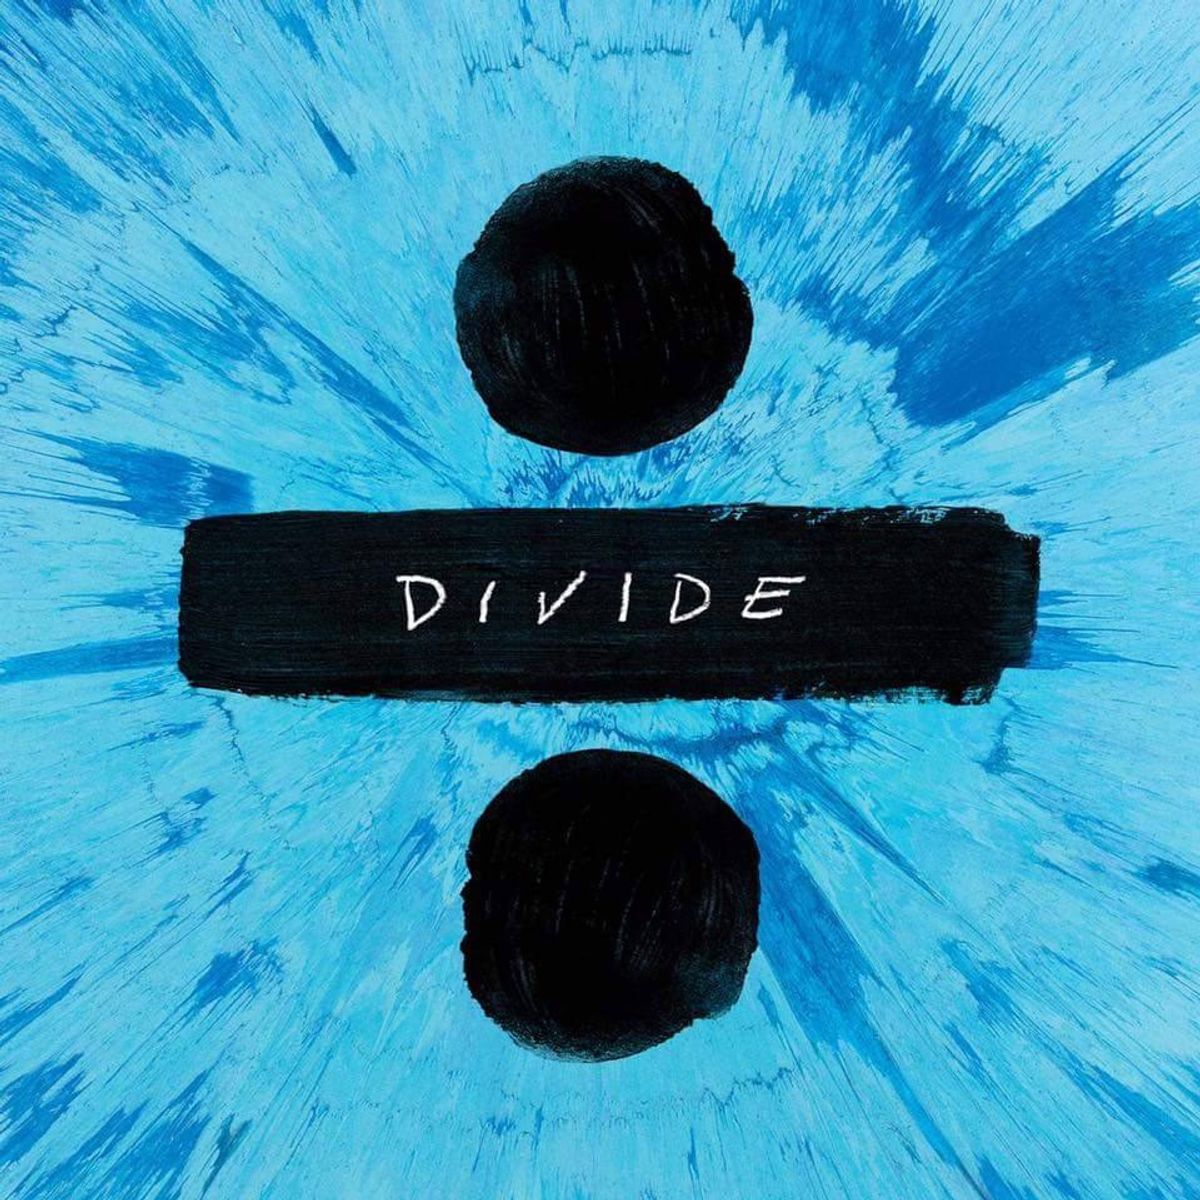 My Favorite Lyrics From "Divide" By Ed Sheeran